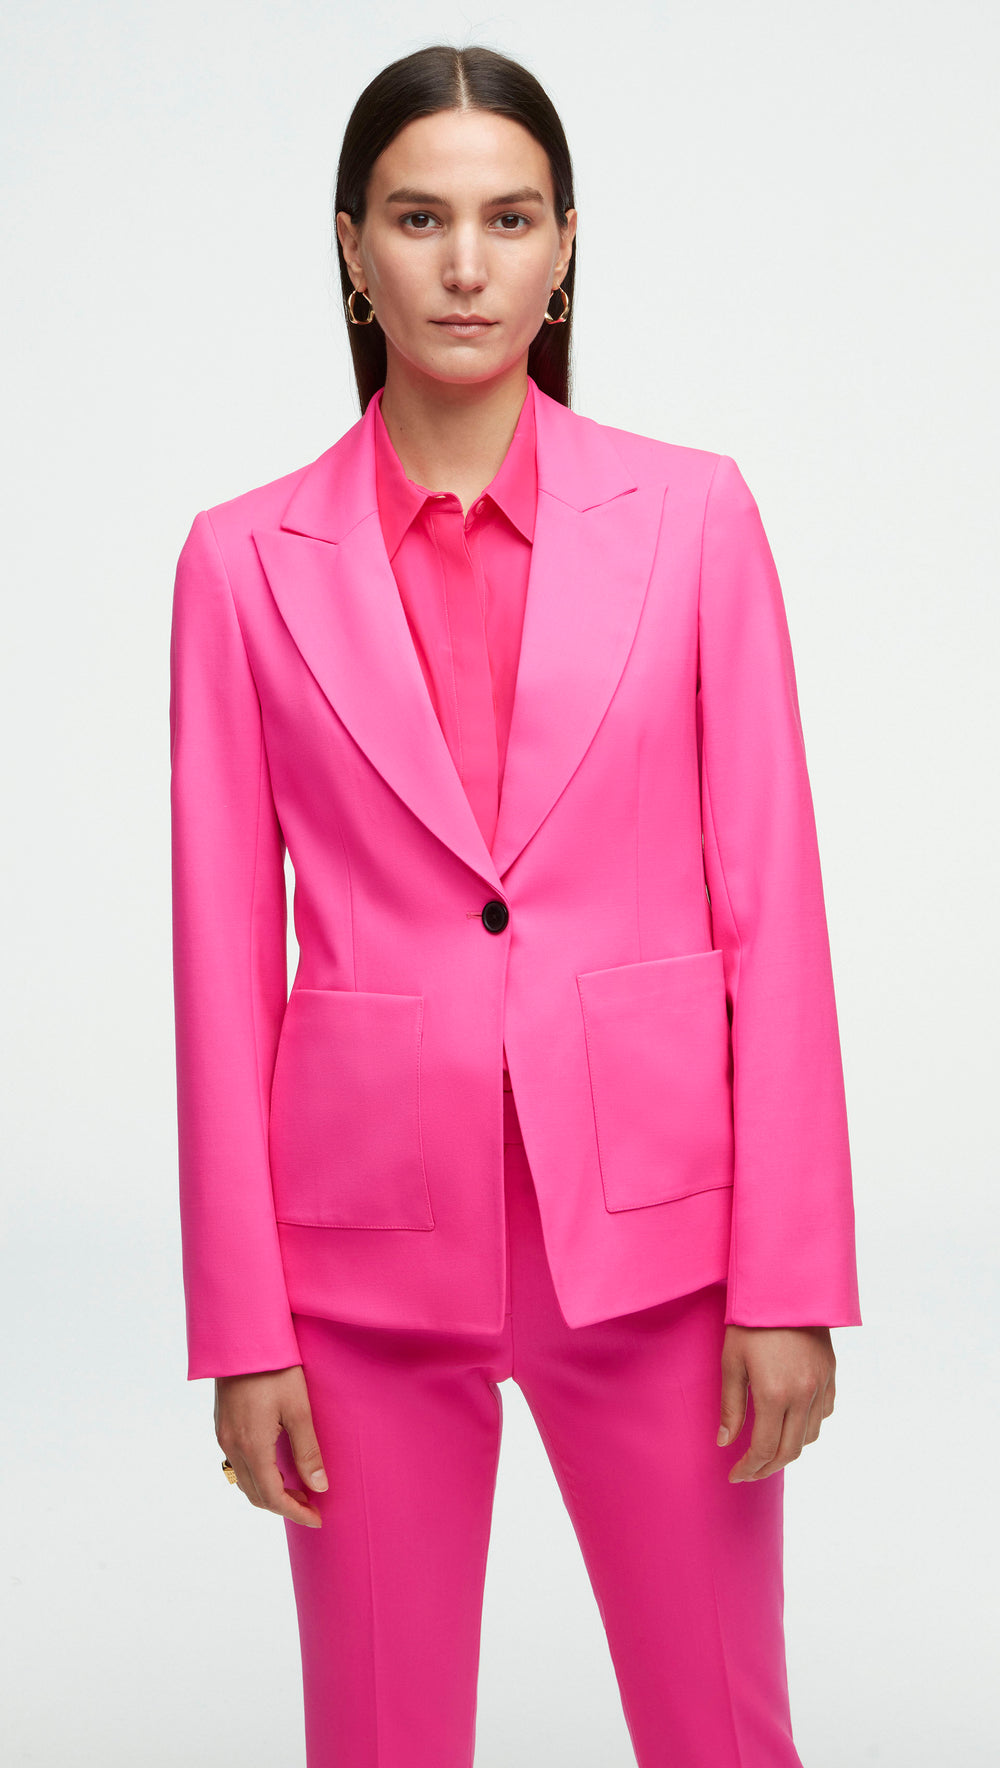 $1150 Theory Women's Red Classic Virgin-Wool 2 Button Suit Blazer Jacket  Size 2 | eBay